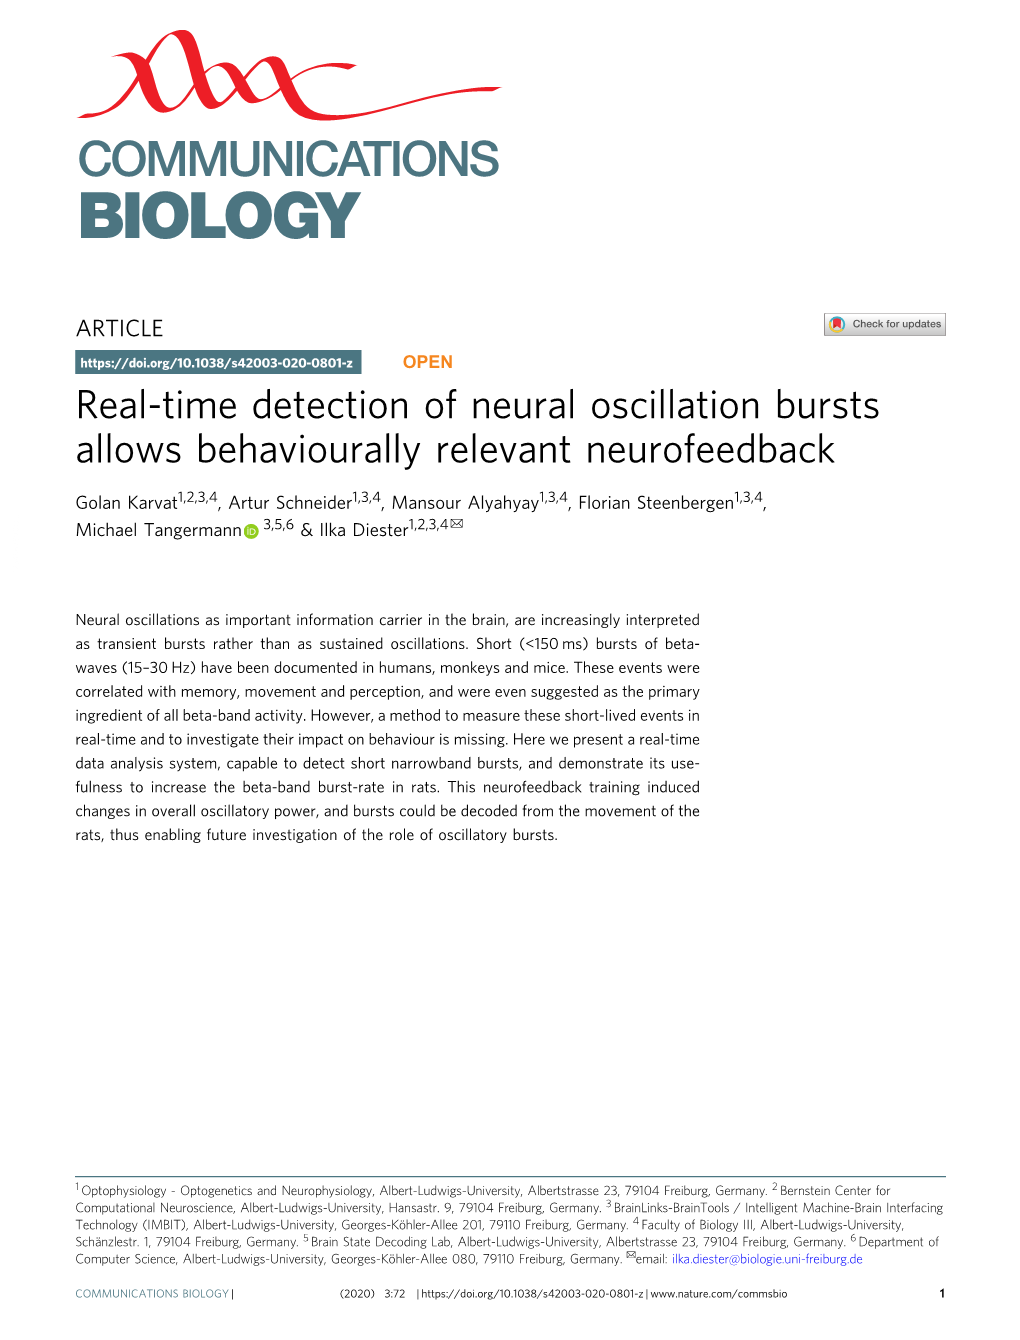 Real-Time Detection of Neural Oscillation Bursts Allows Behaviourally Relevant Neurofeedback